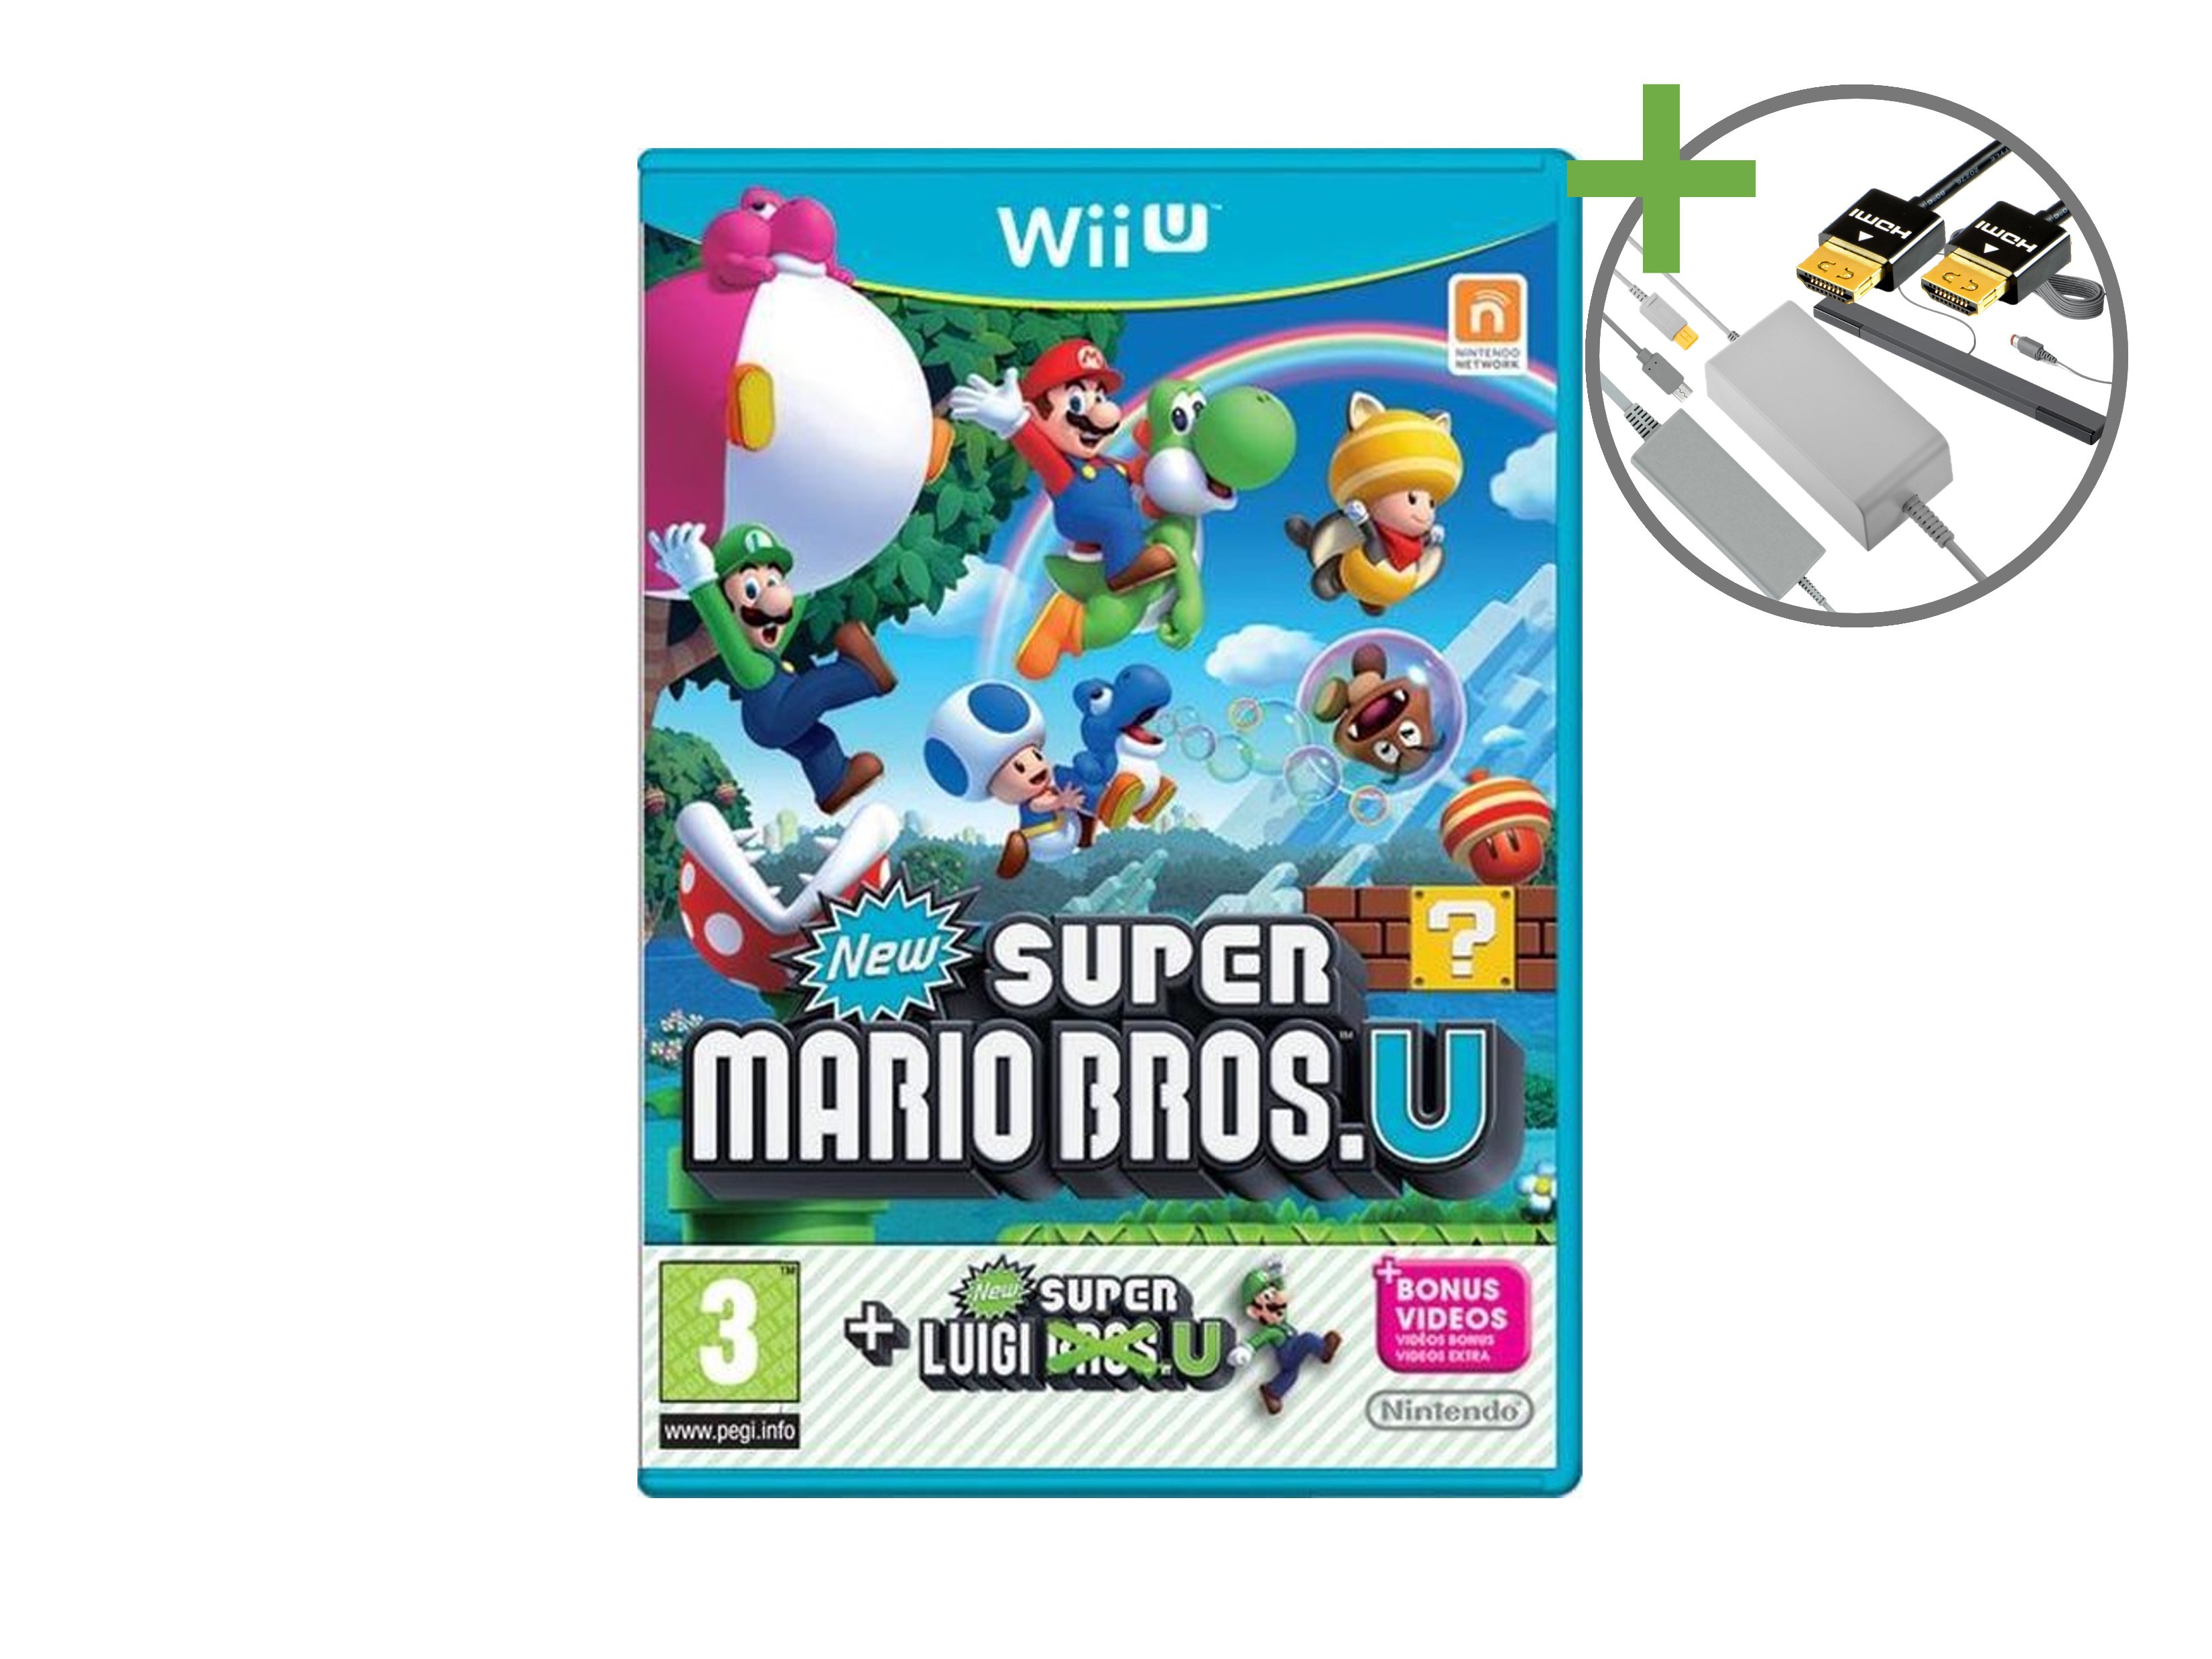 Nintendo Wii U Starter Pack - New Super Mario Bros. U + New Super Luigi U Edition [Complete] - Wii U Hardware - 5